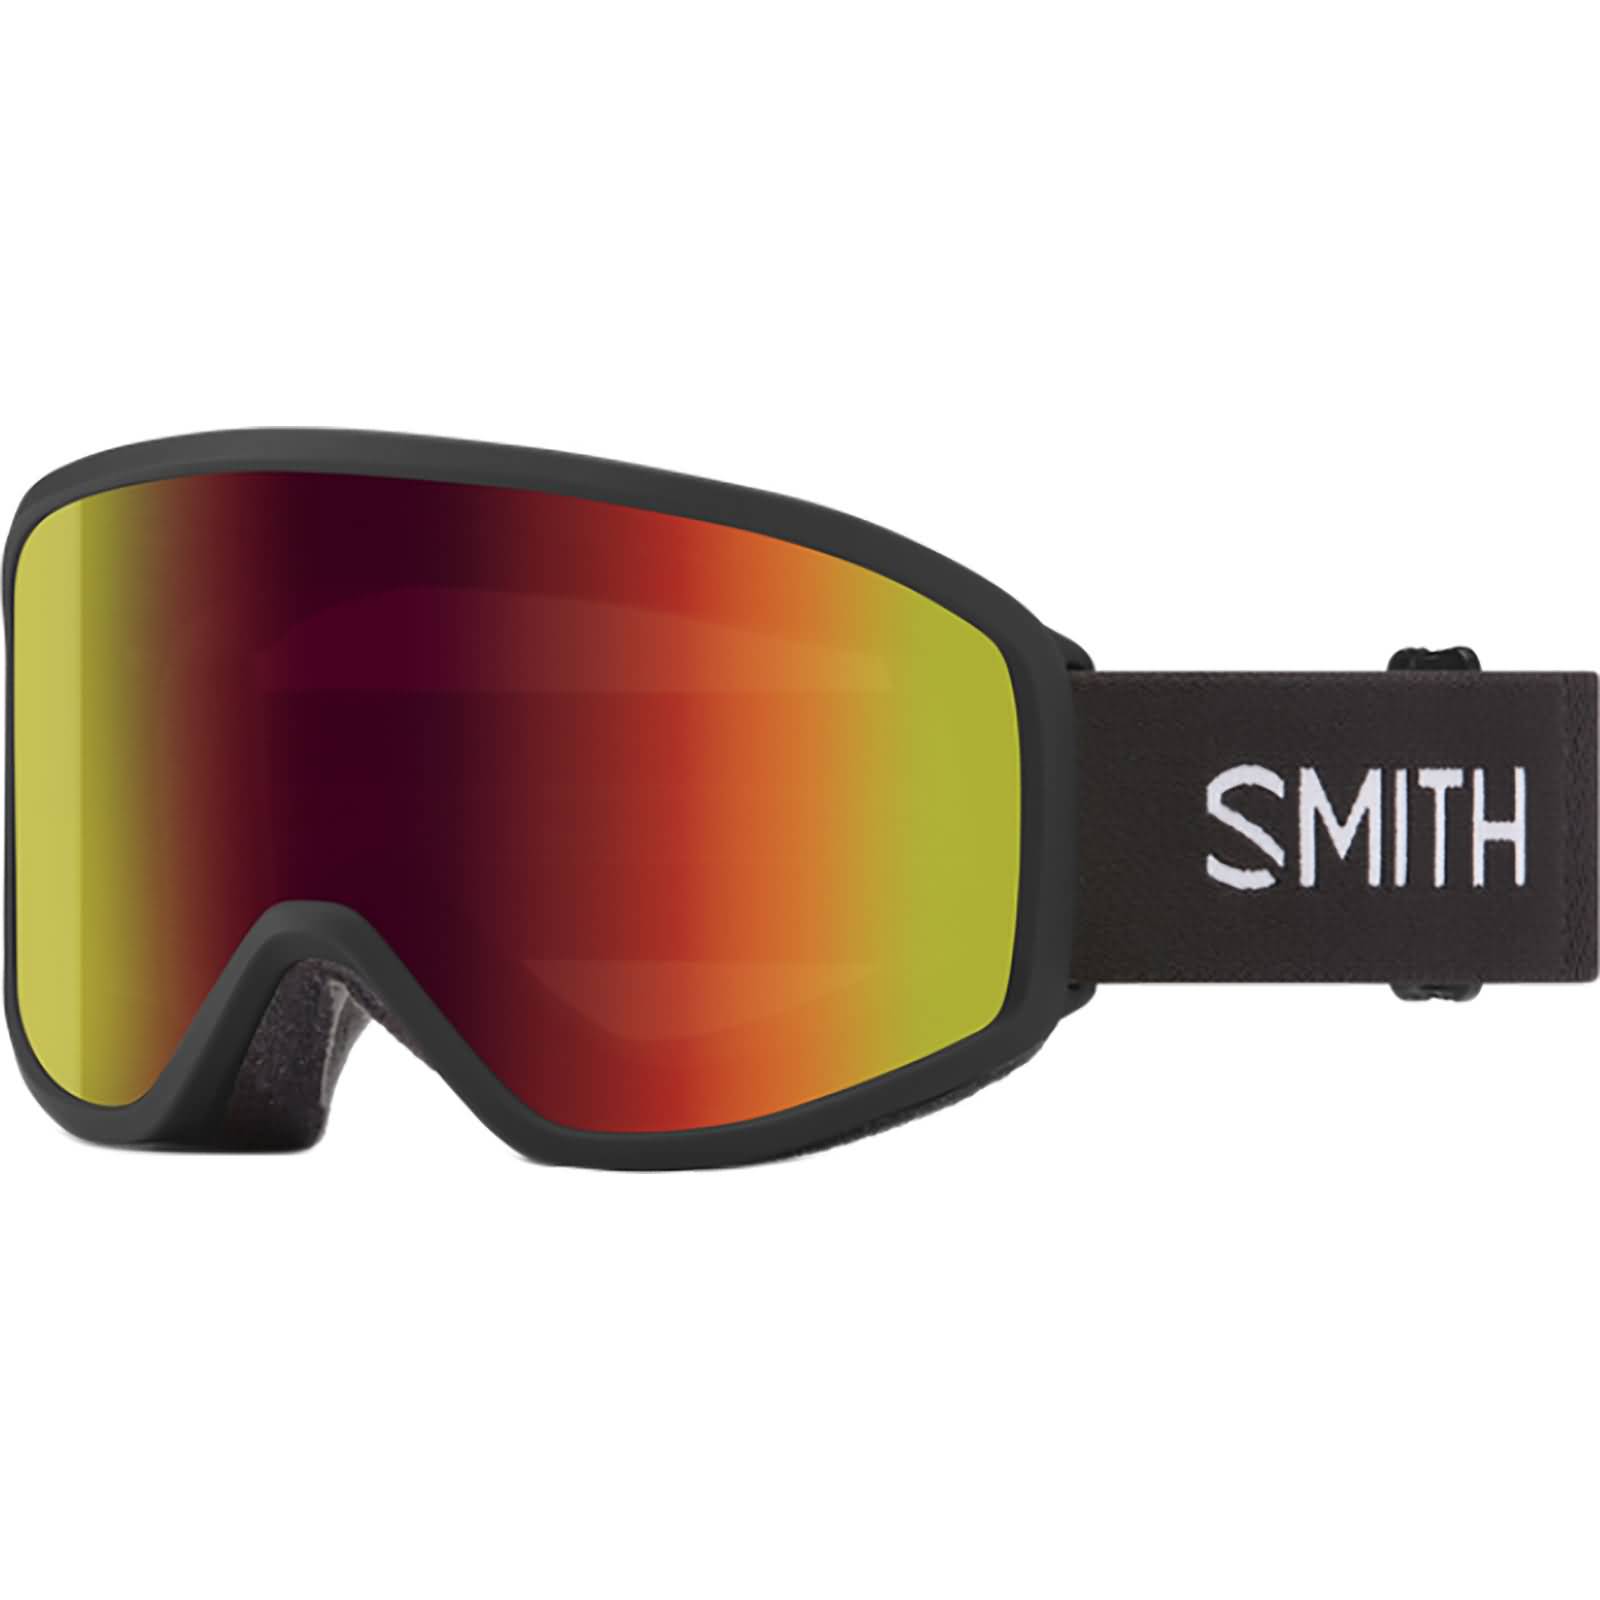 Smith Optics Reason OTG Asian Fit Adult Snow Goggles-M007732QJ99C1